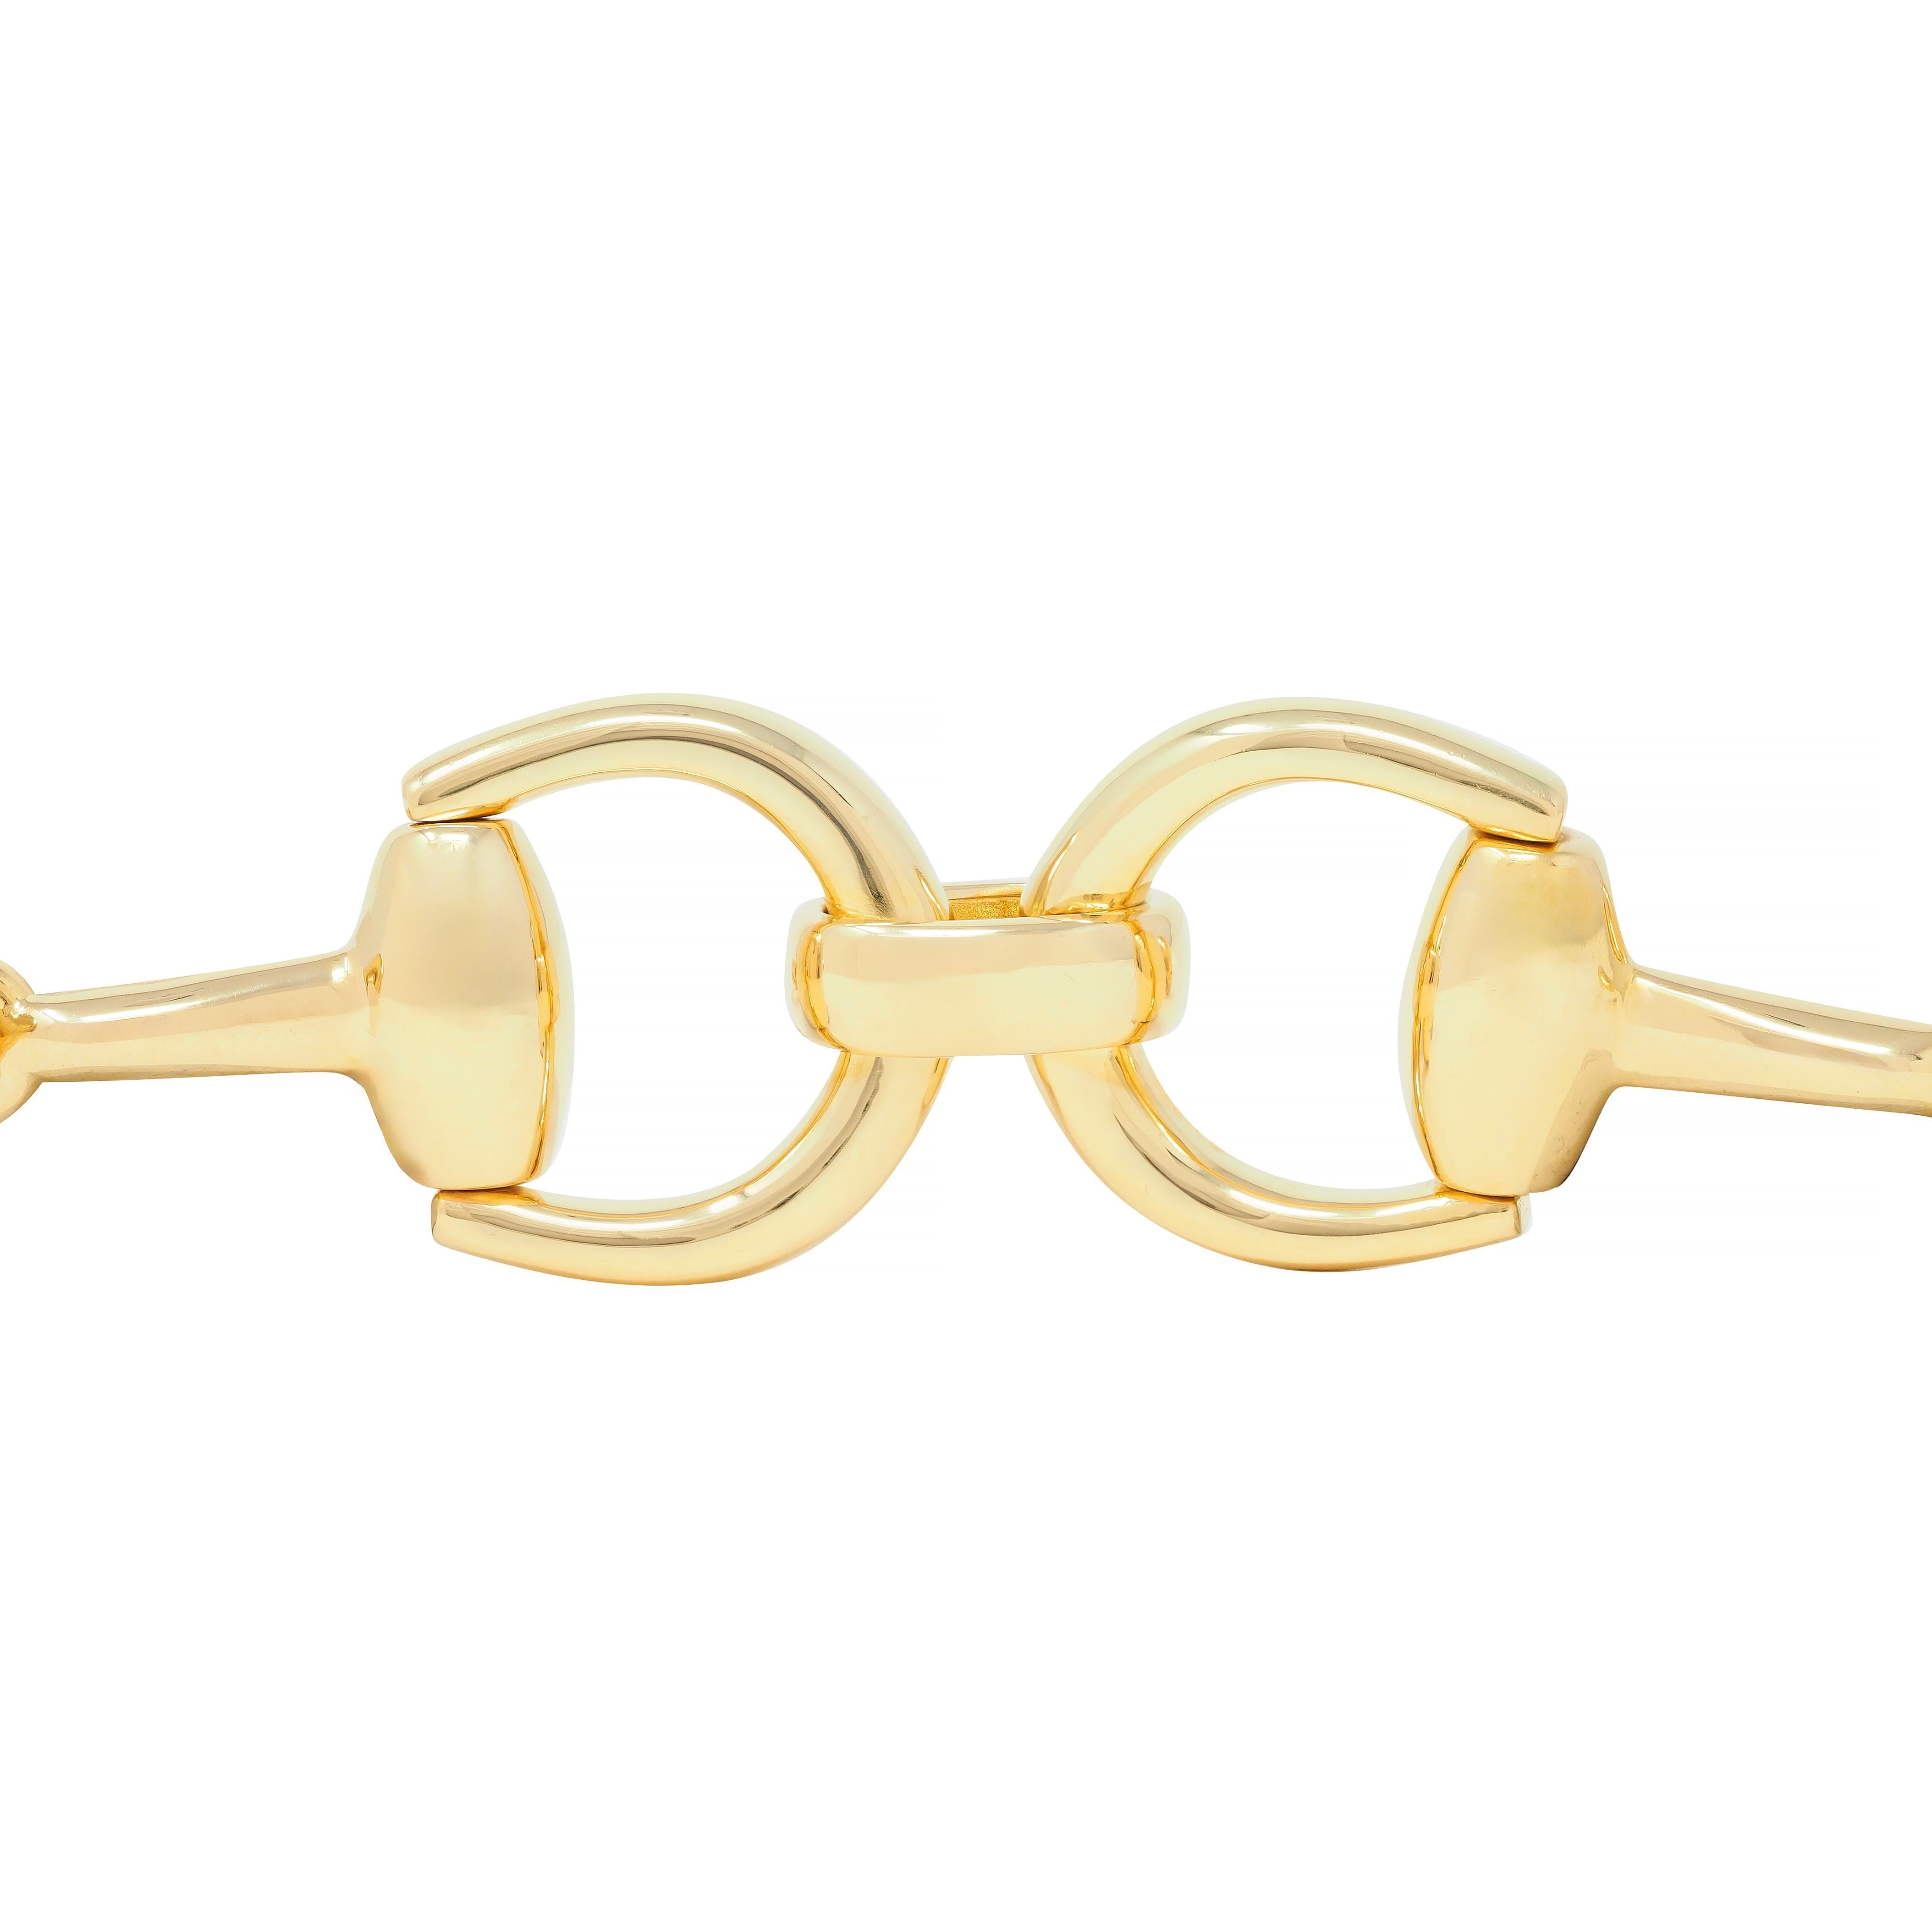 Gucci 18 Karat Yellow Gold Horsebit Vintage Link Bracelet In Excellent Condition For Sale In Philadelphia, PA